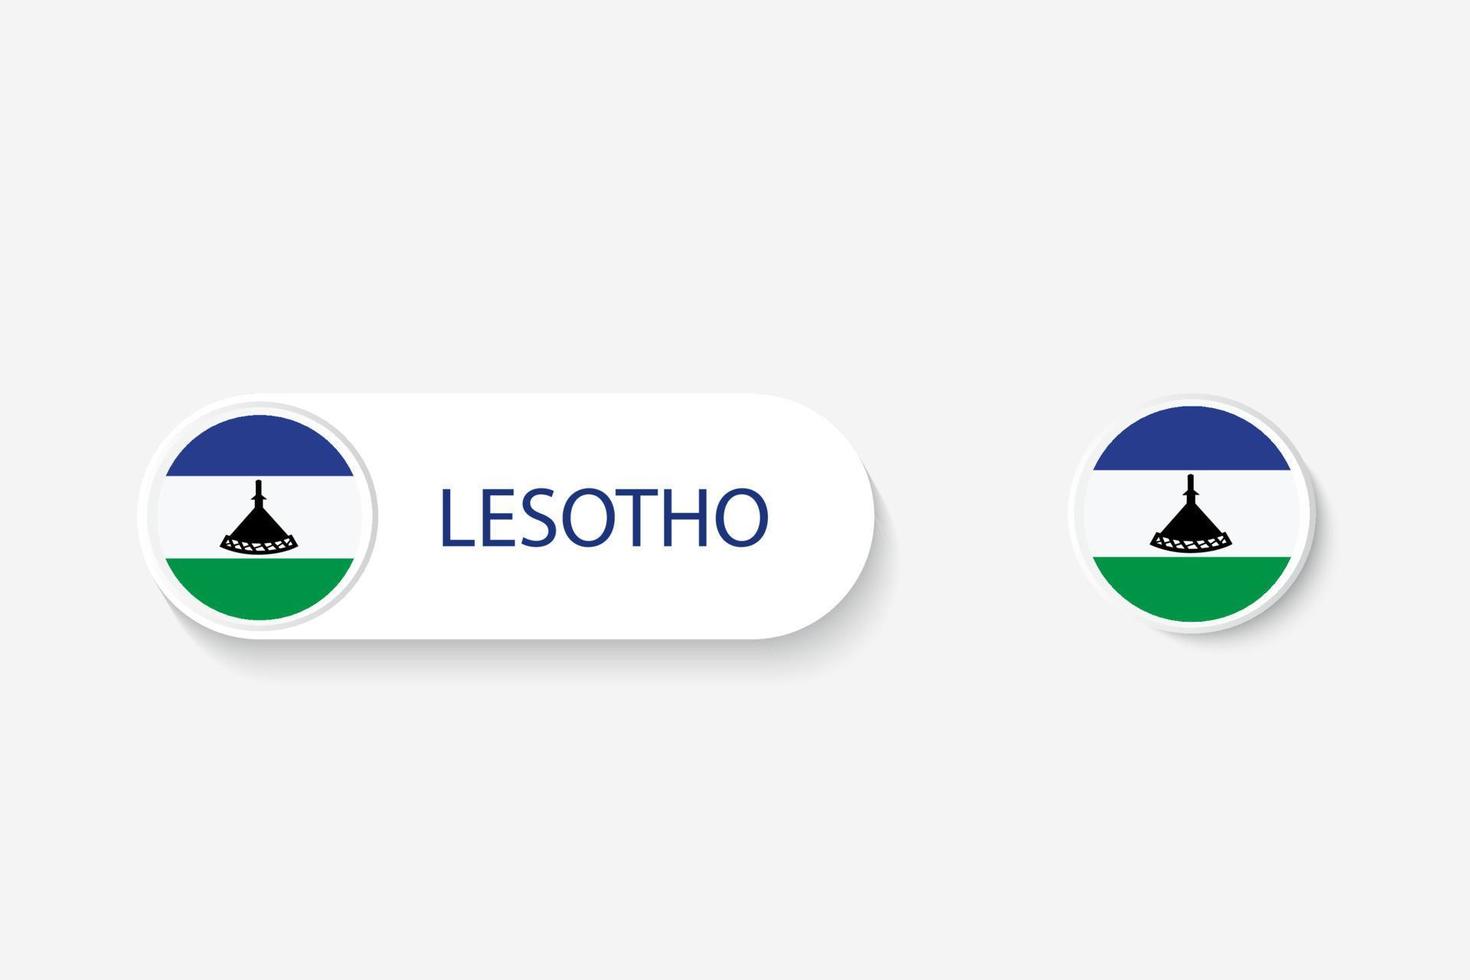 lesotho-knopfflagge in der illustration des ovalen geformt mit wort von lesotho. und Knopfflagge Lesotho. vektor